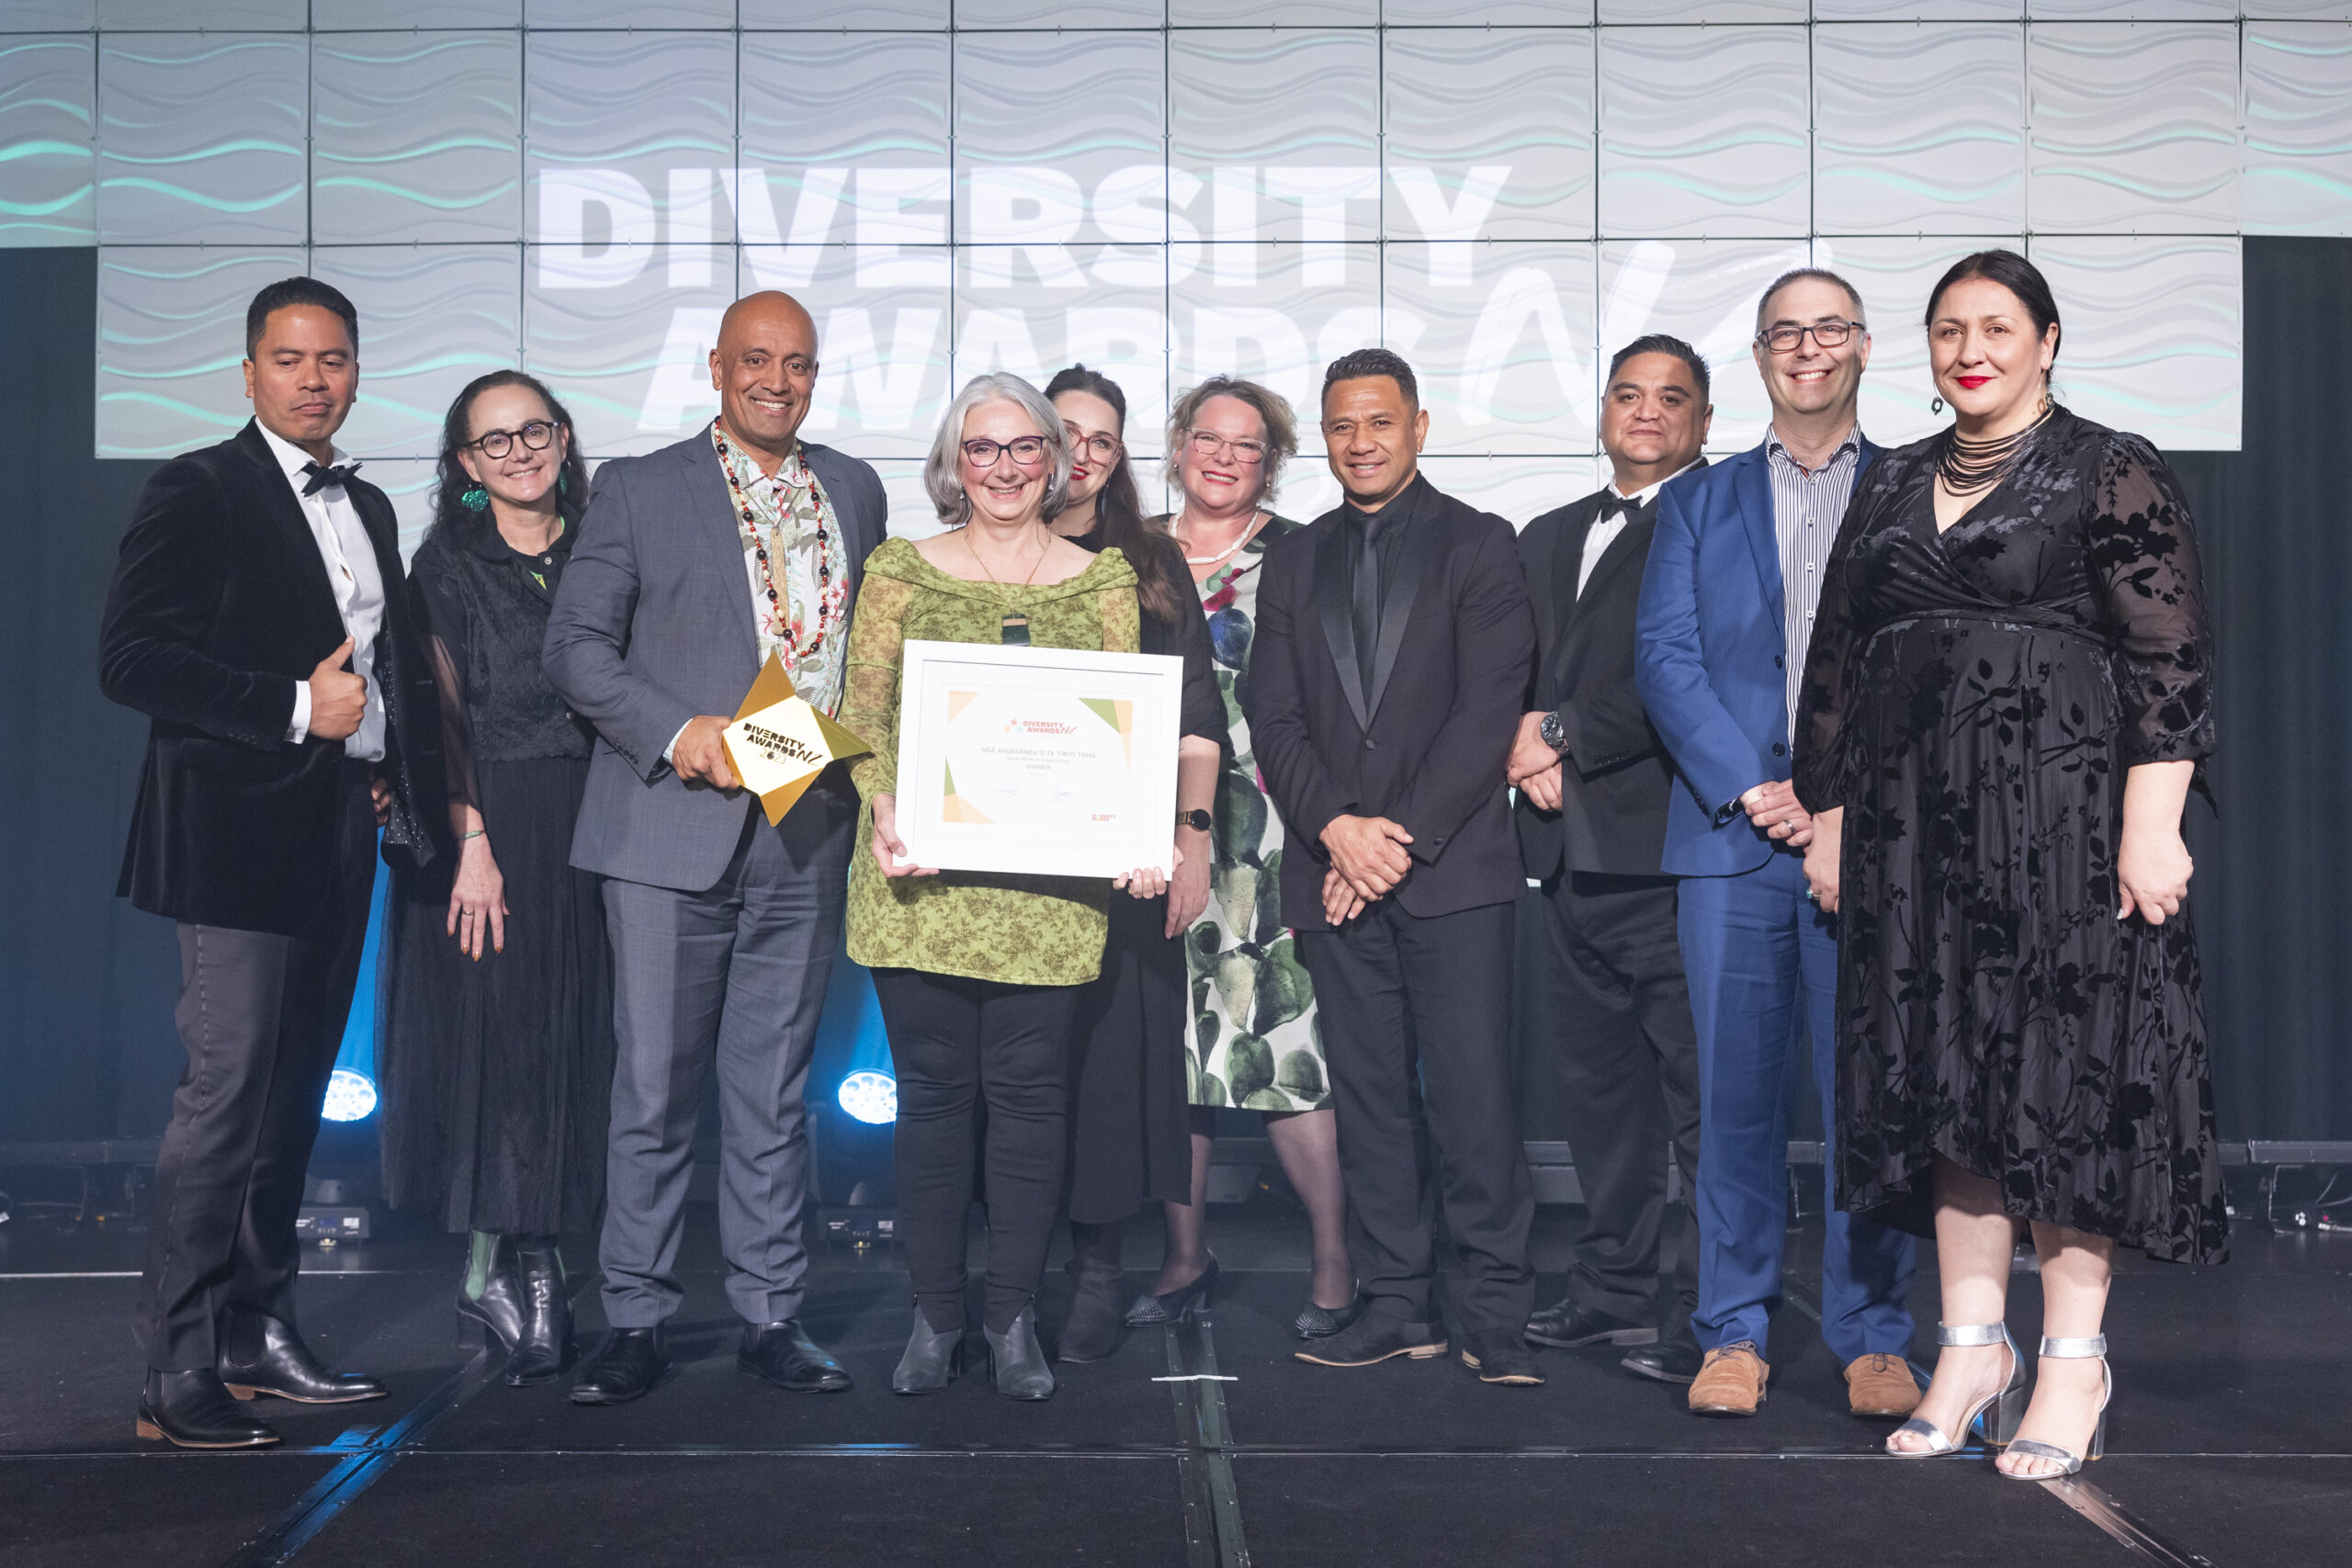 Te Kāhui Pou (the executive leadership team) accepting the diversity award as a group from judge Dr. Nicola Ngawati